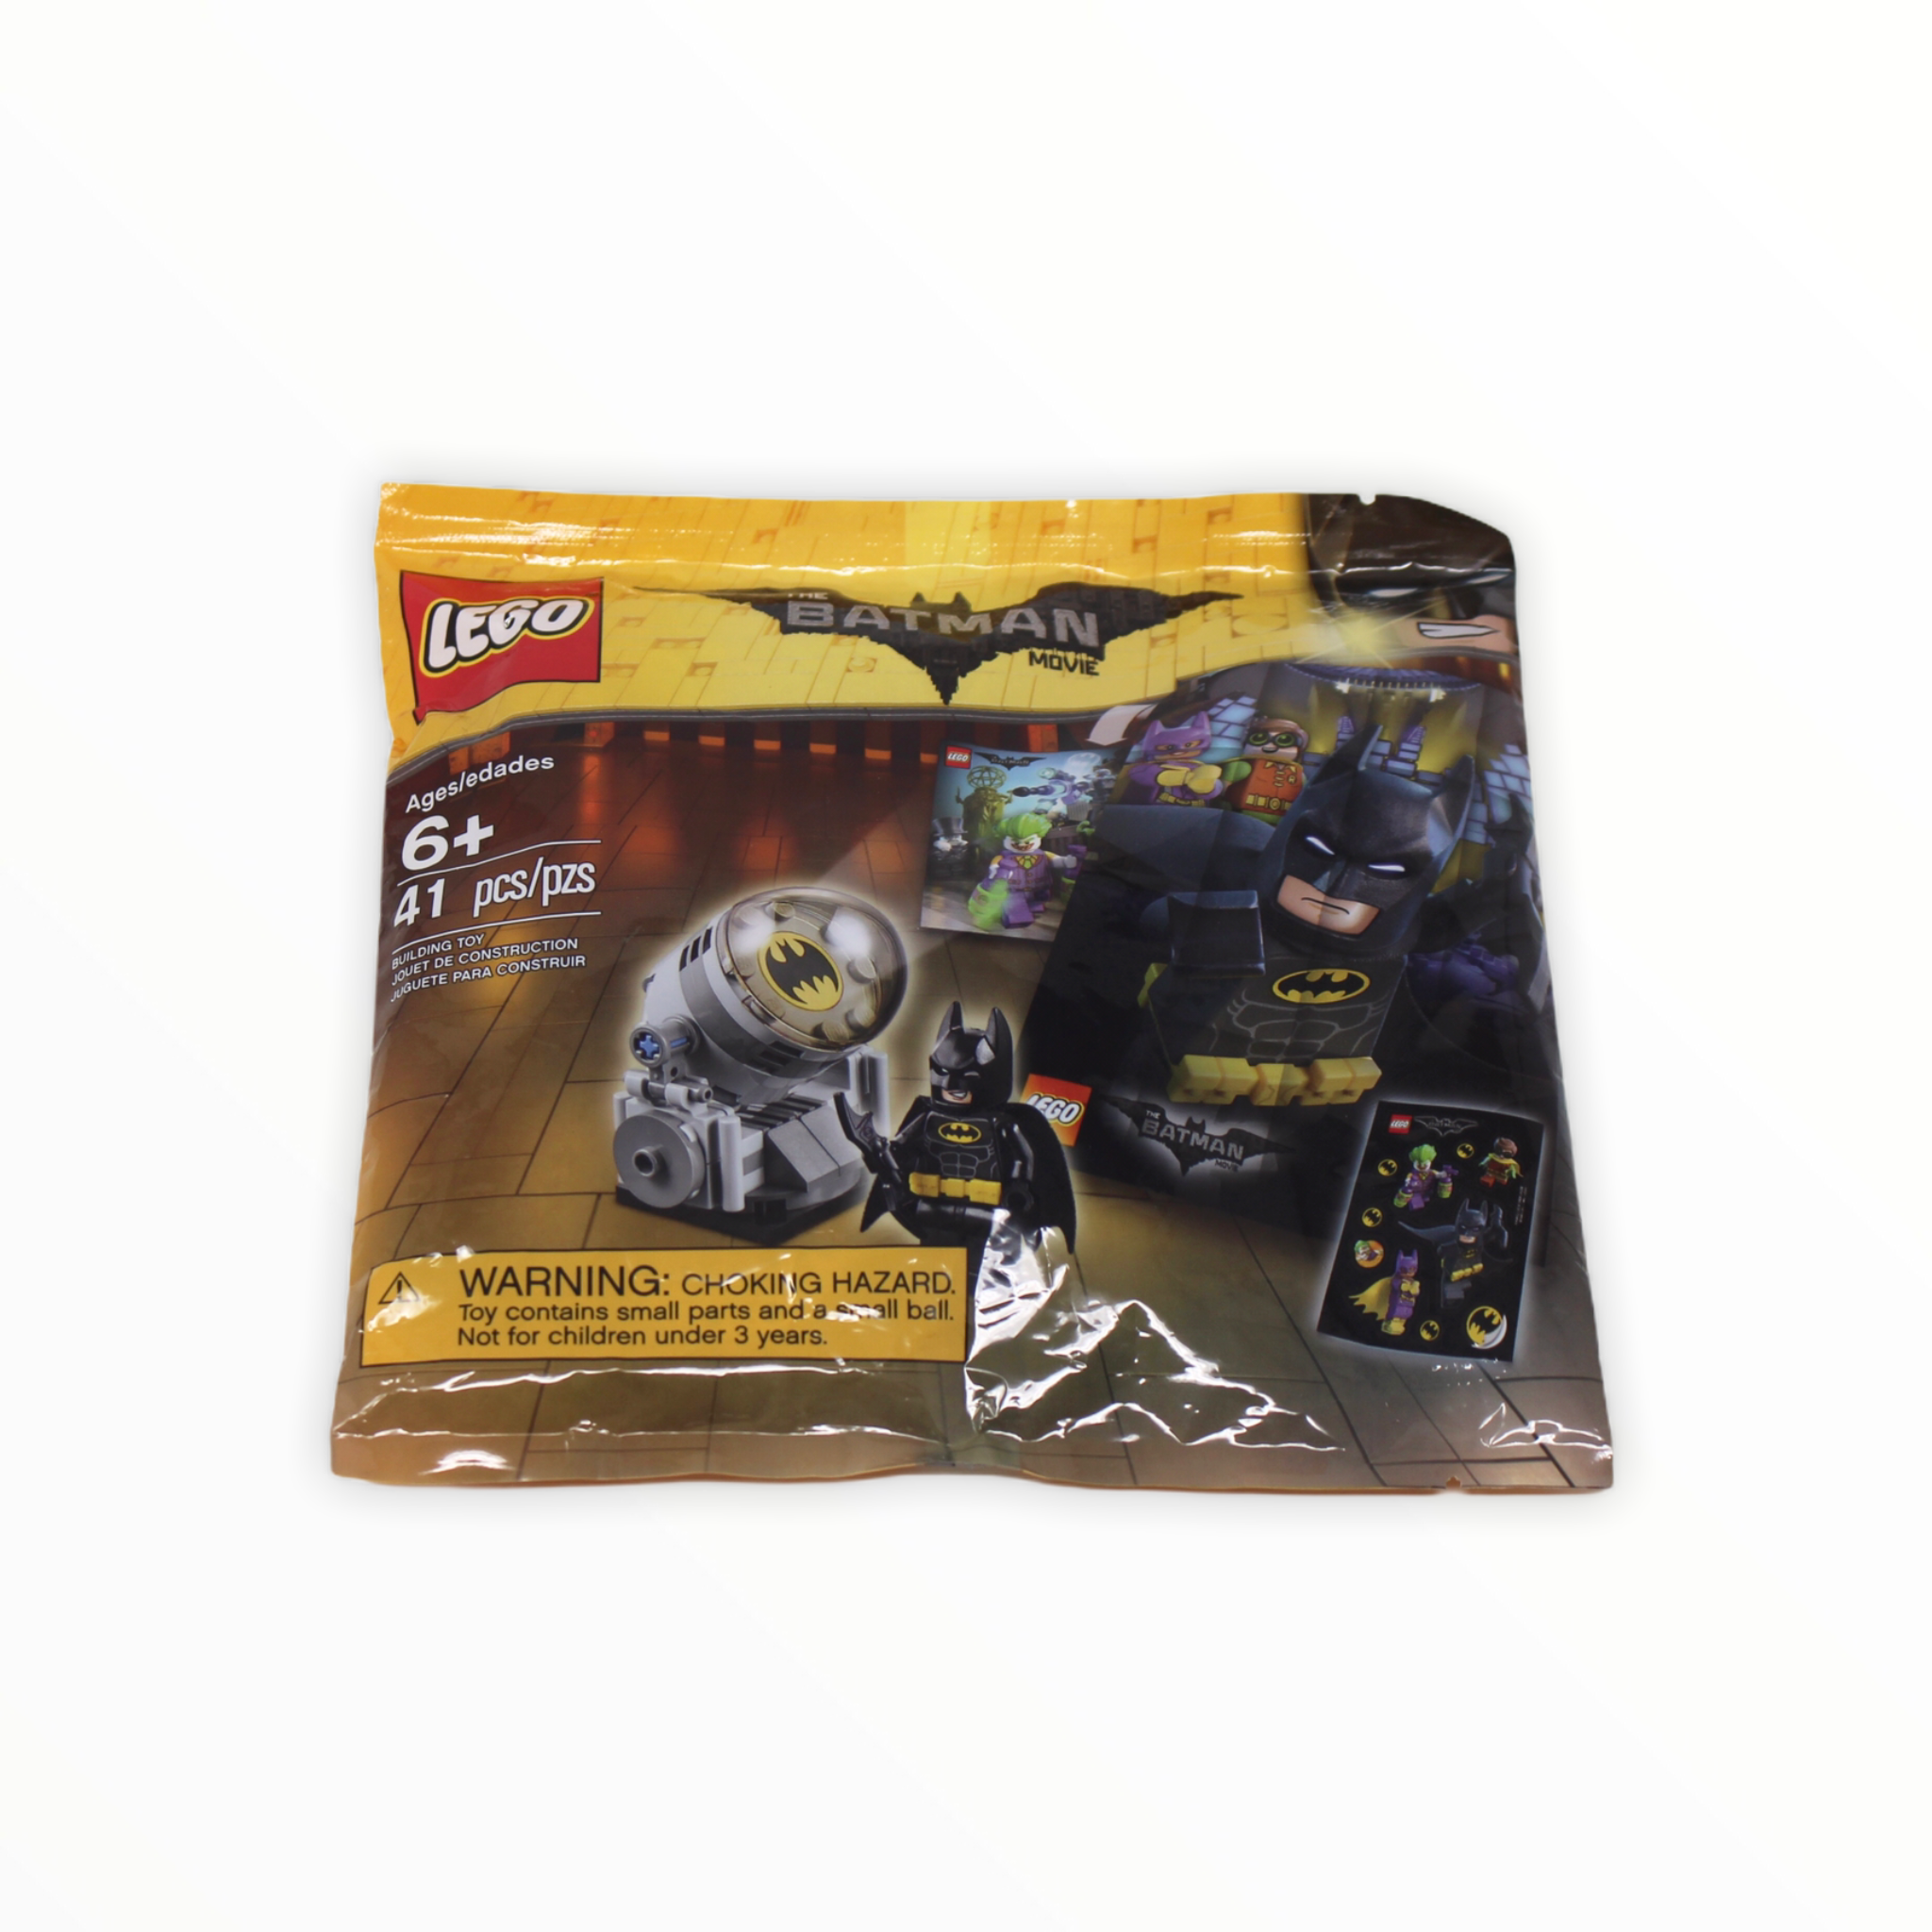 Polybag 5004930 LEGO Batman Movie Accessory Pack